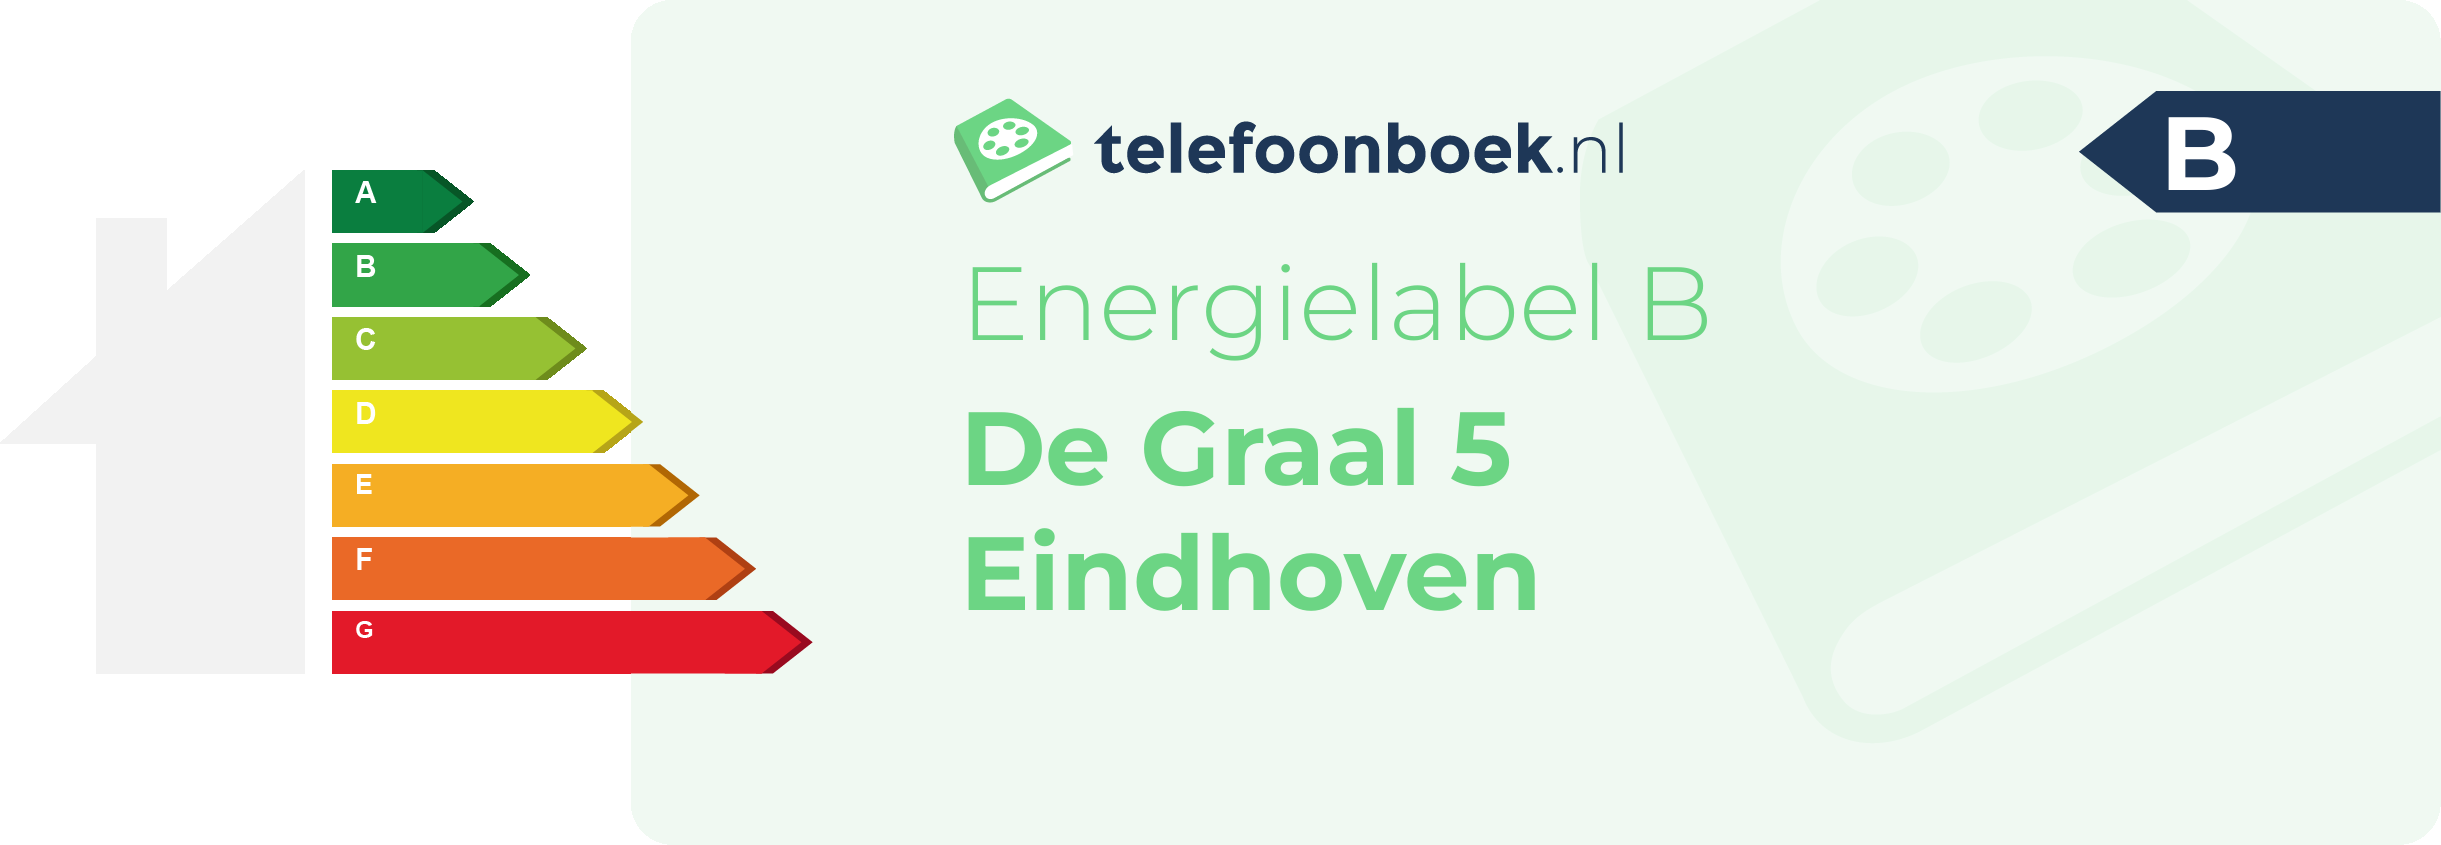 Energielabel De Graal 5 Eindhoven